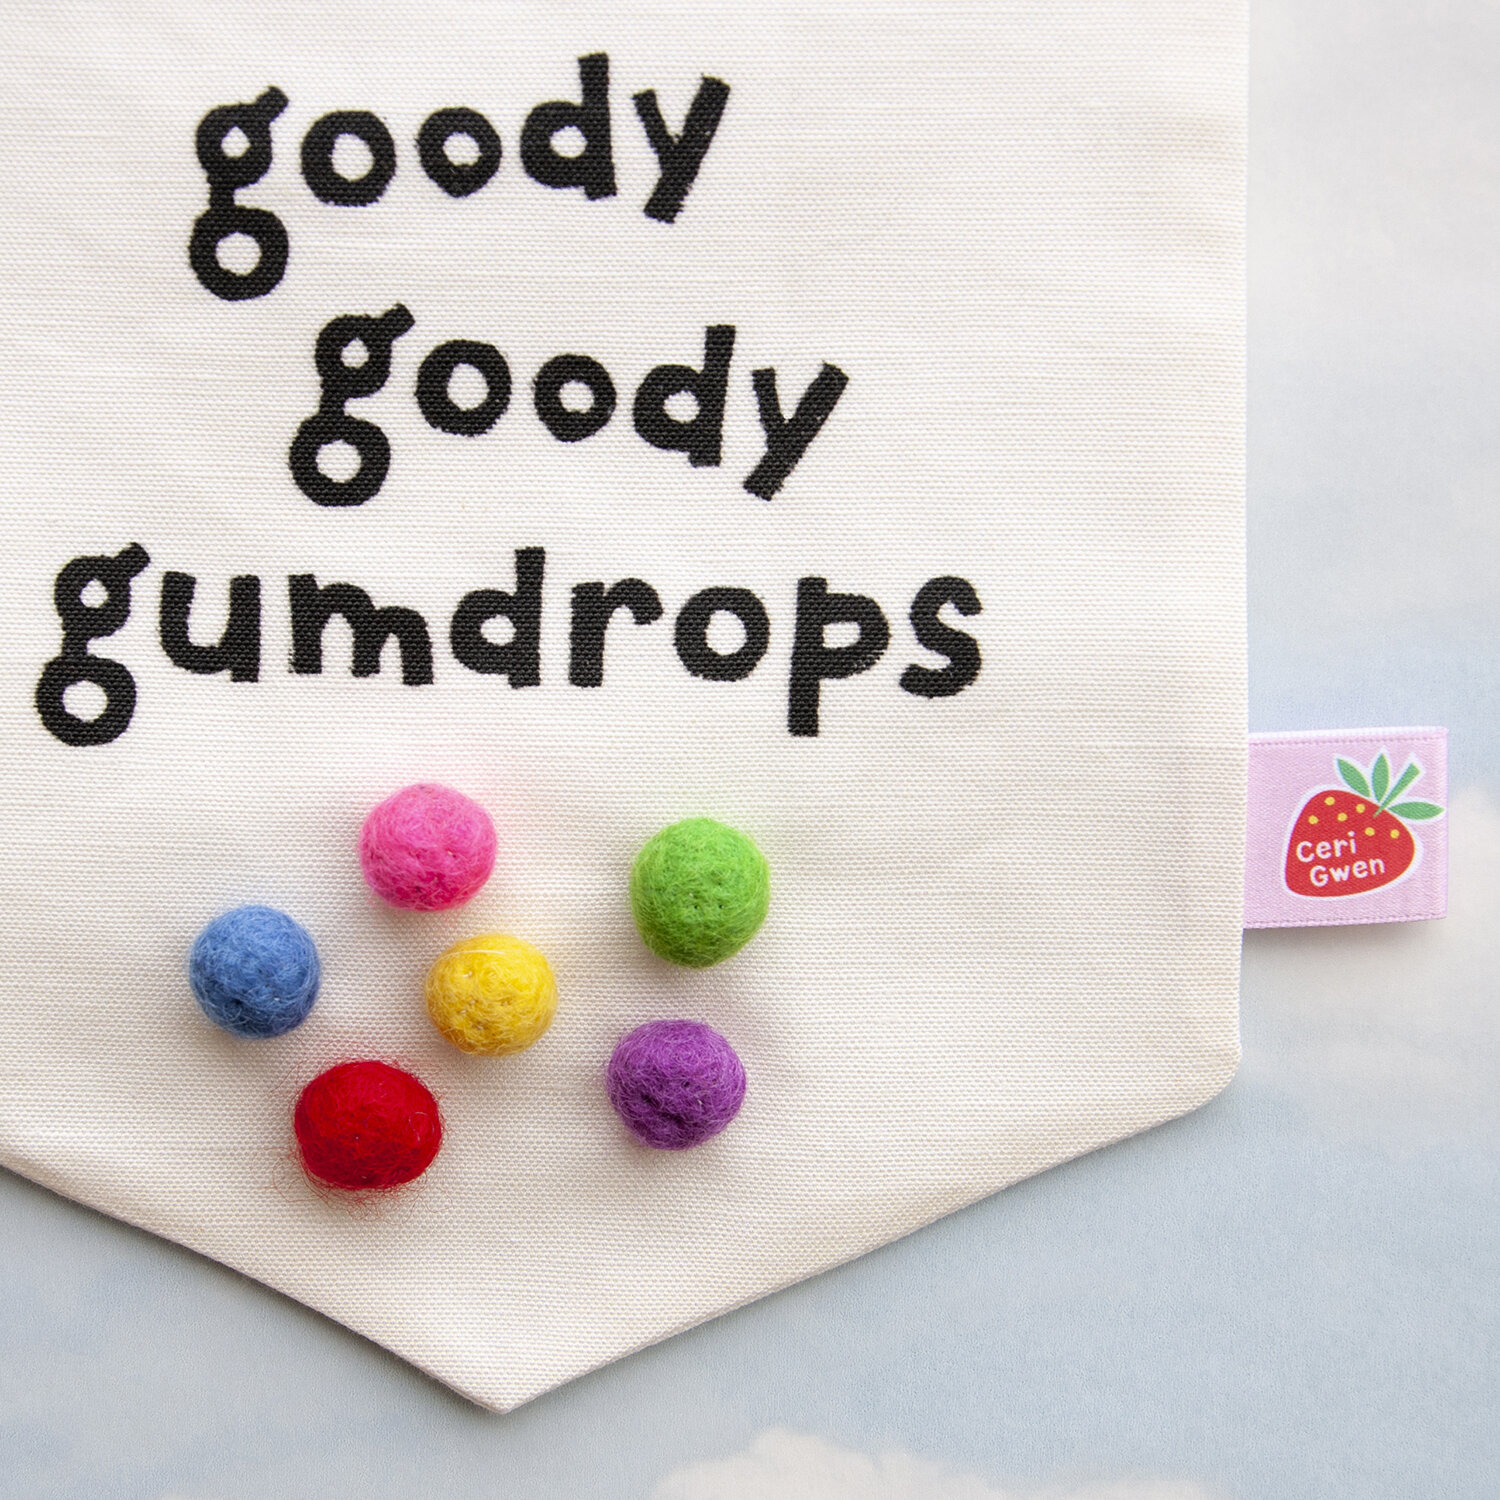 Goody Goody Gumdrops banner